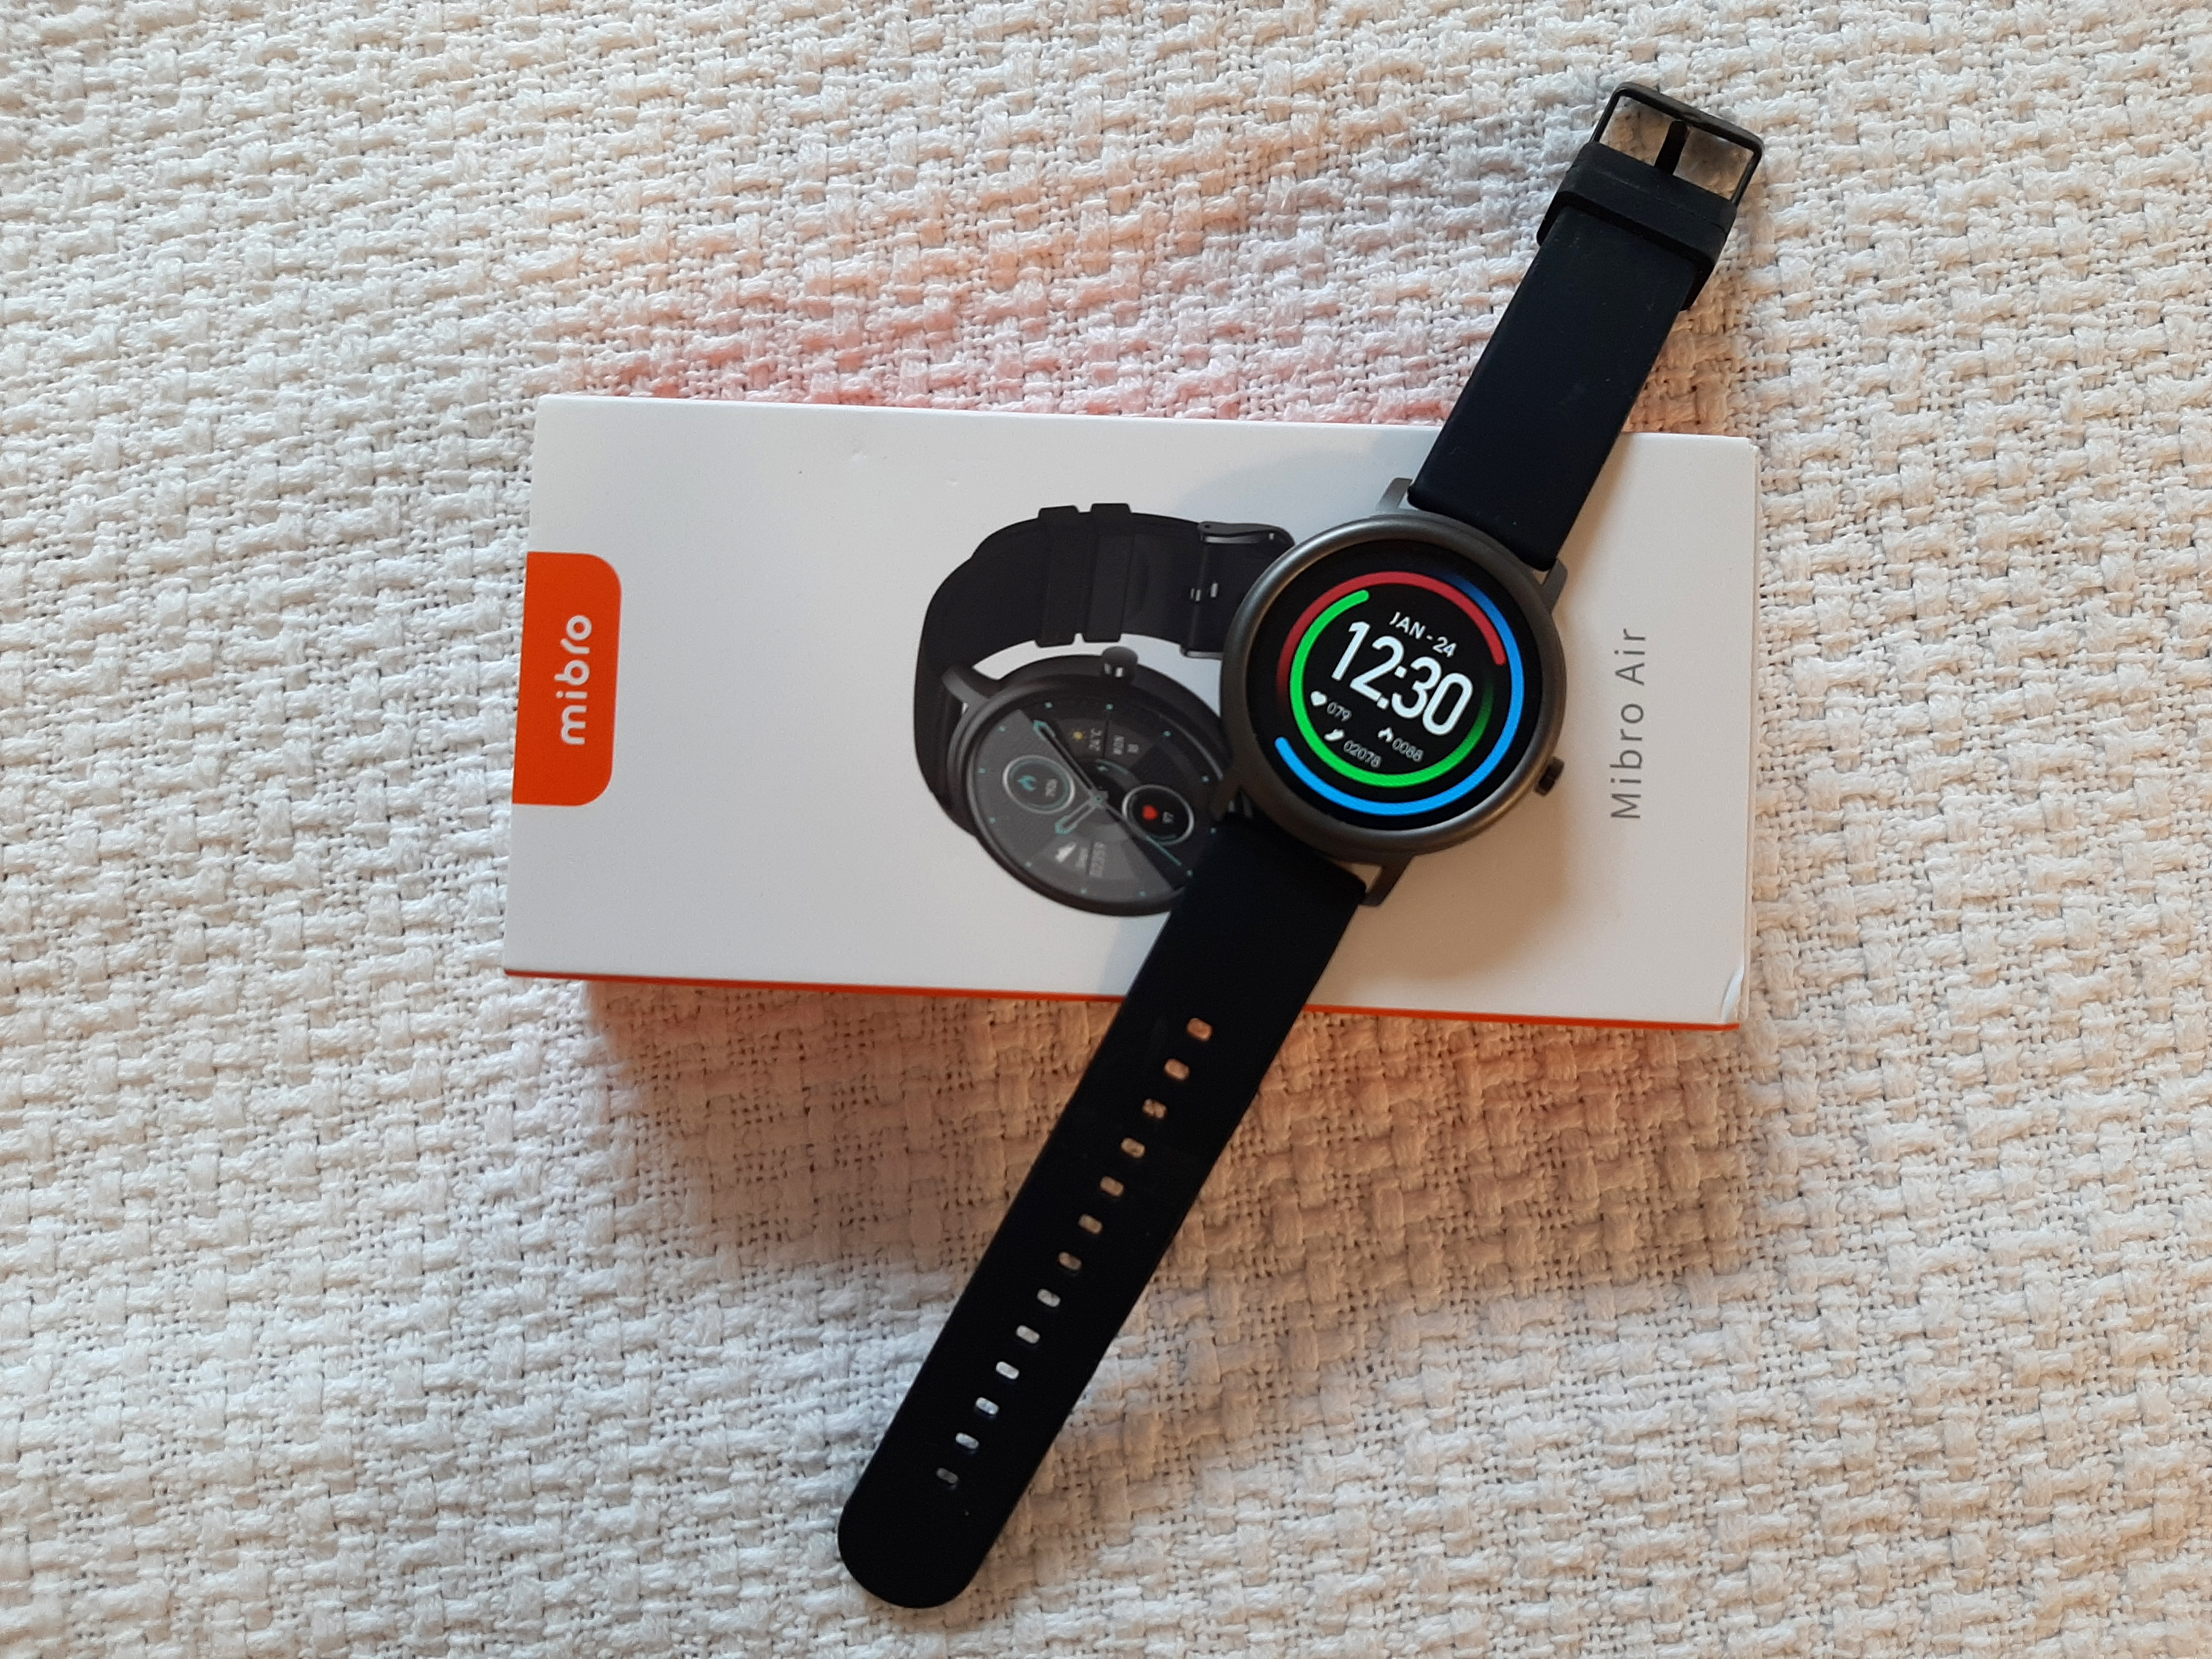 Смарт Часы Xiaomi Mibro Air Black Xpaw001